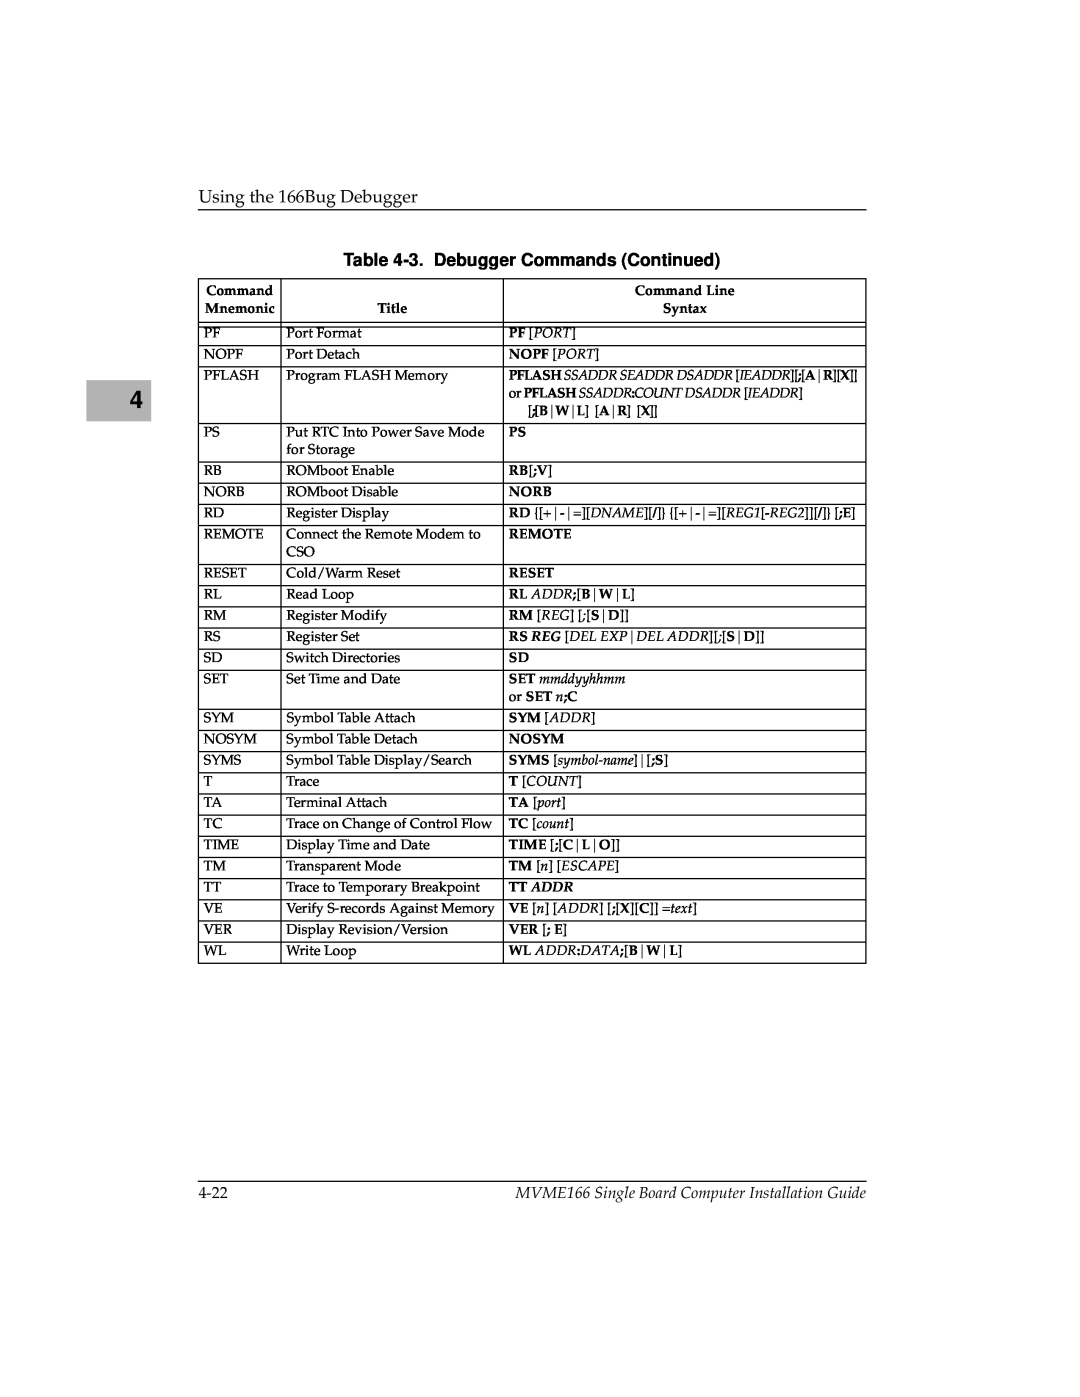 Motorola MVME166IG/D2 manual 3. Debugger Commands Continued, MVME166 Single Board Computer Installation Guide, Tt Addr 